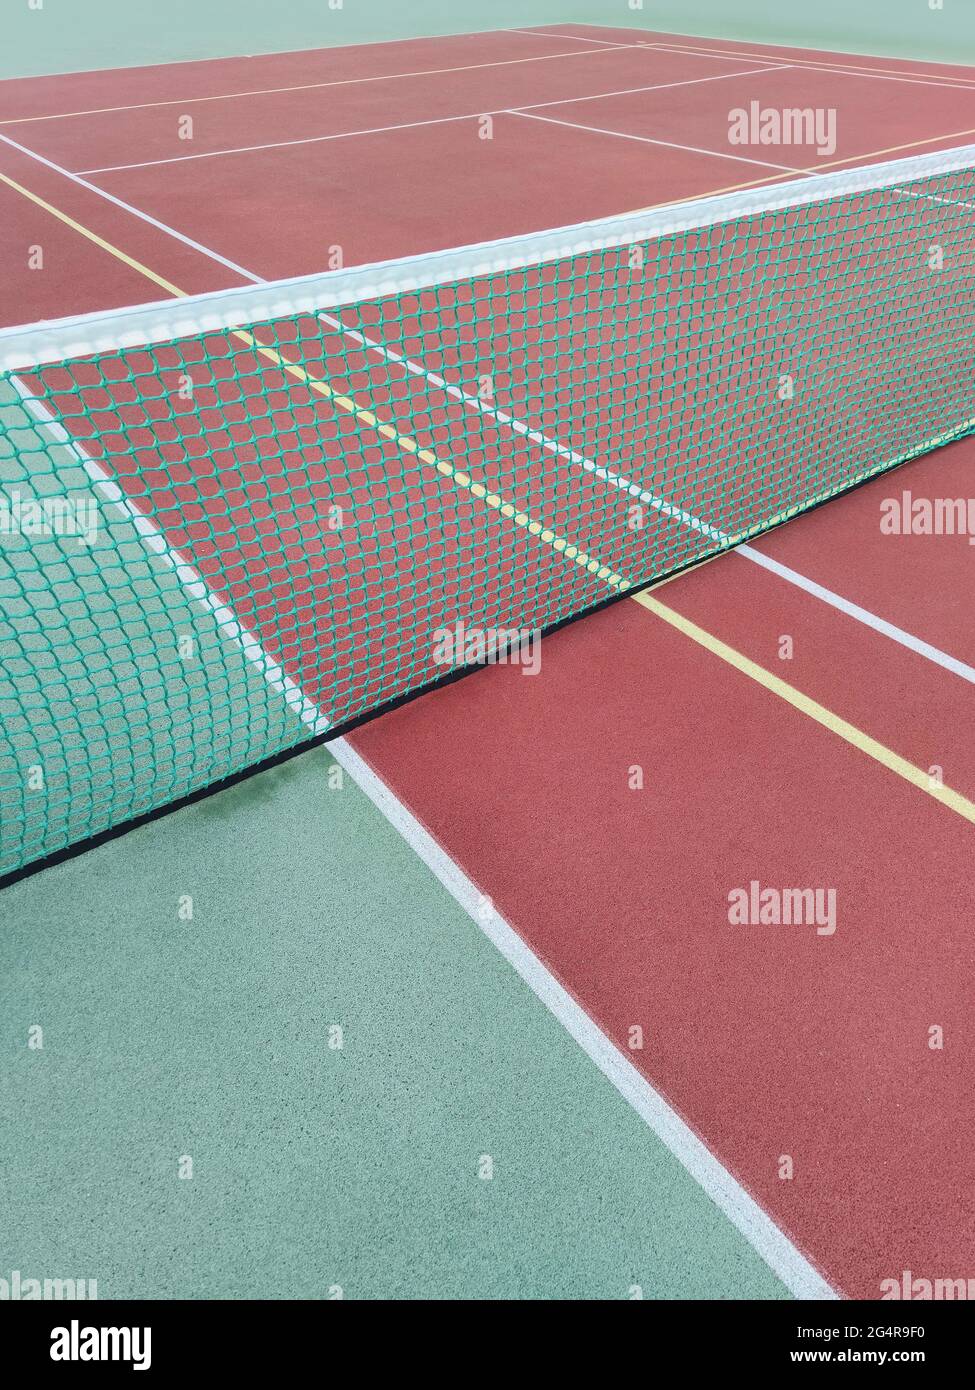 Tennis game. empty tennis court. Sport, recreation concept photo Stock Photo